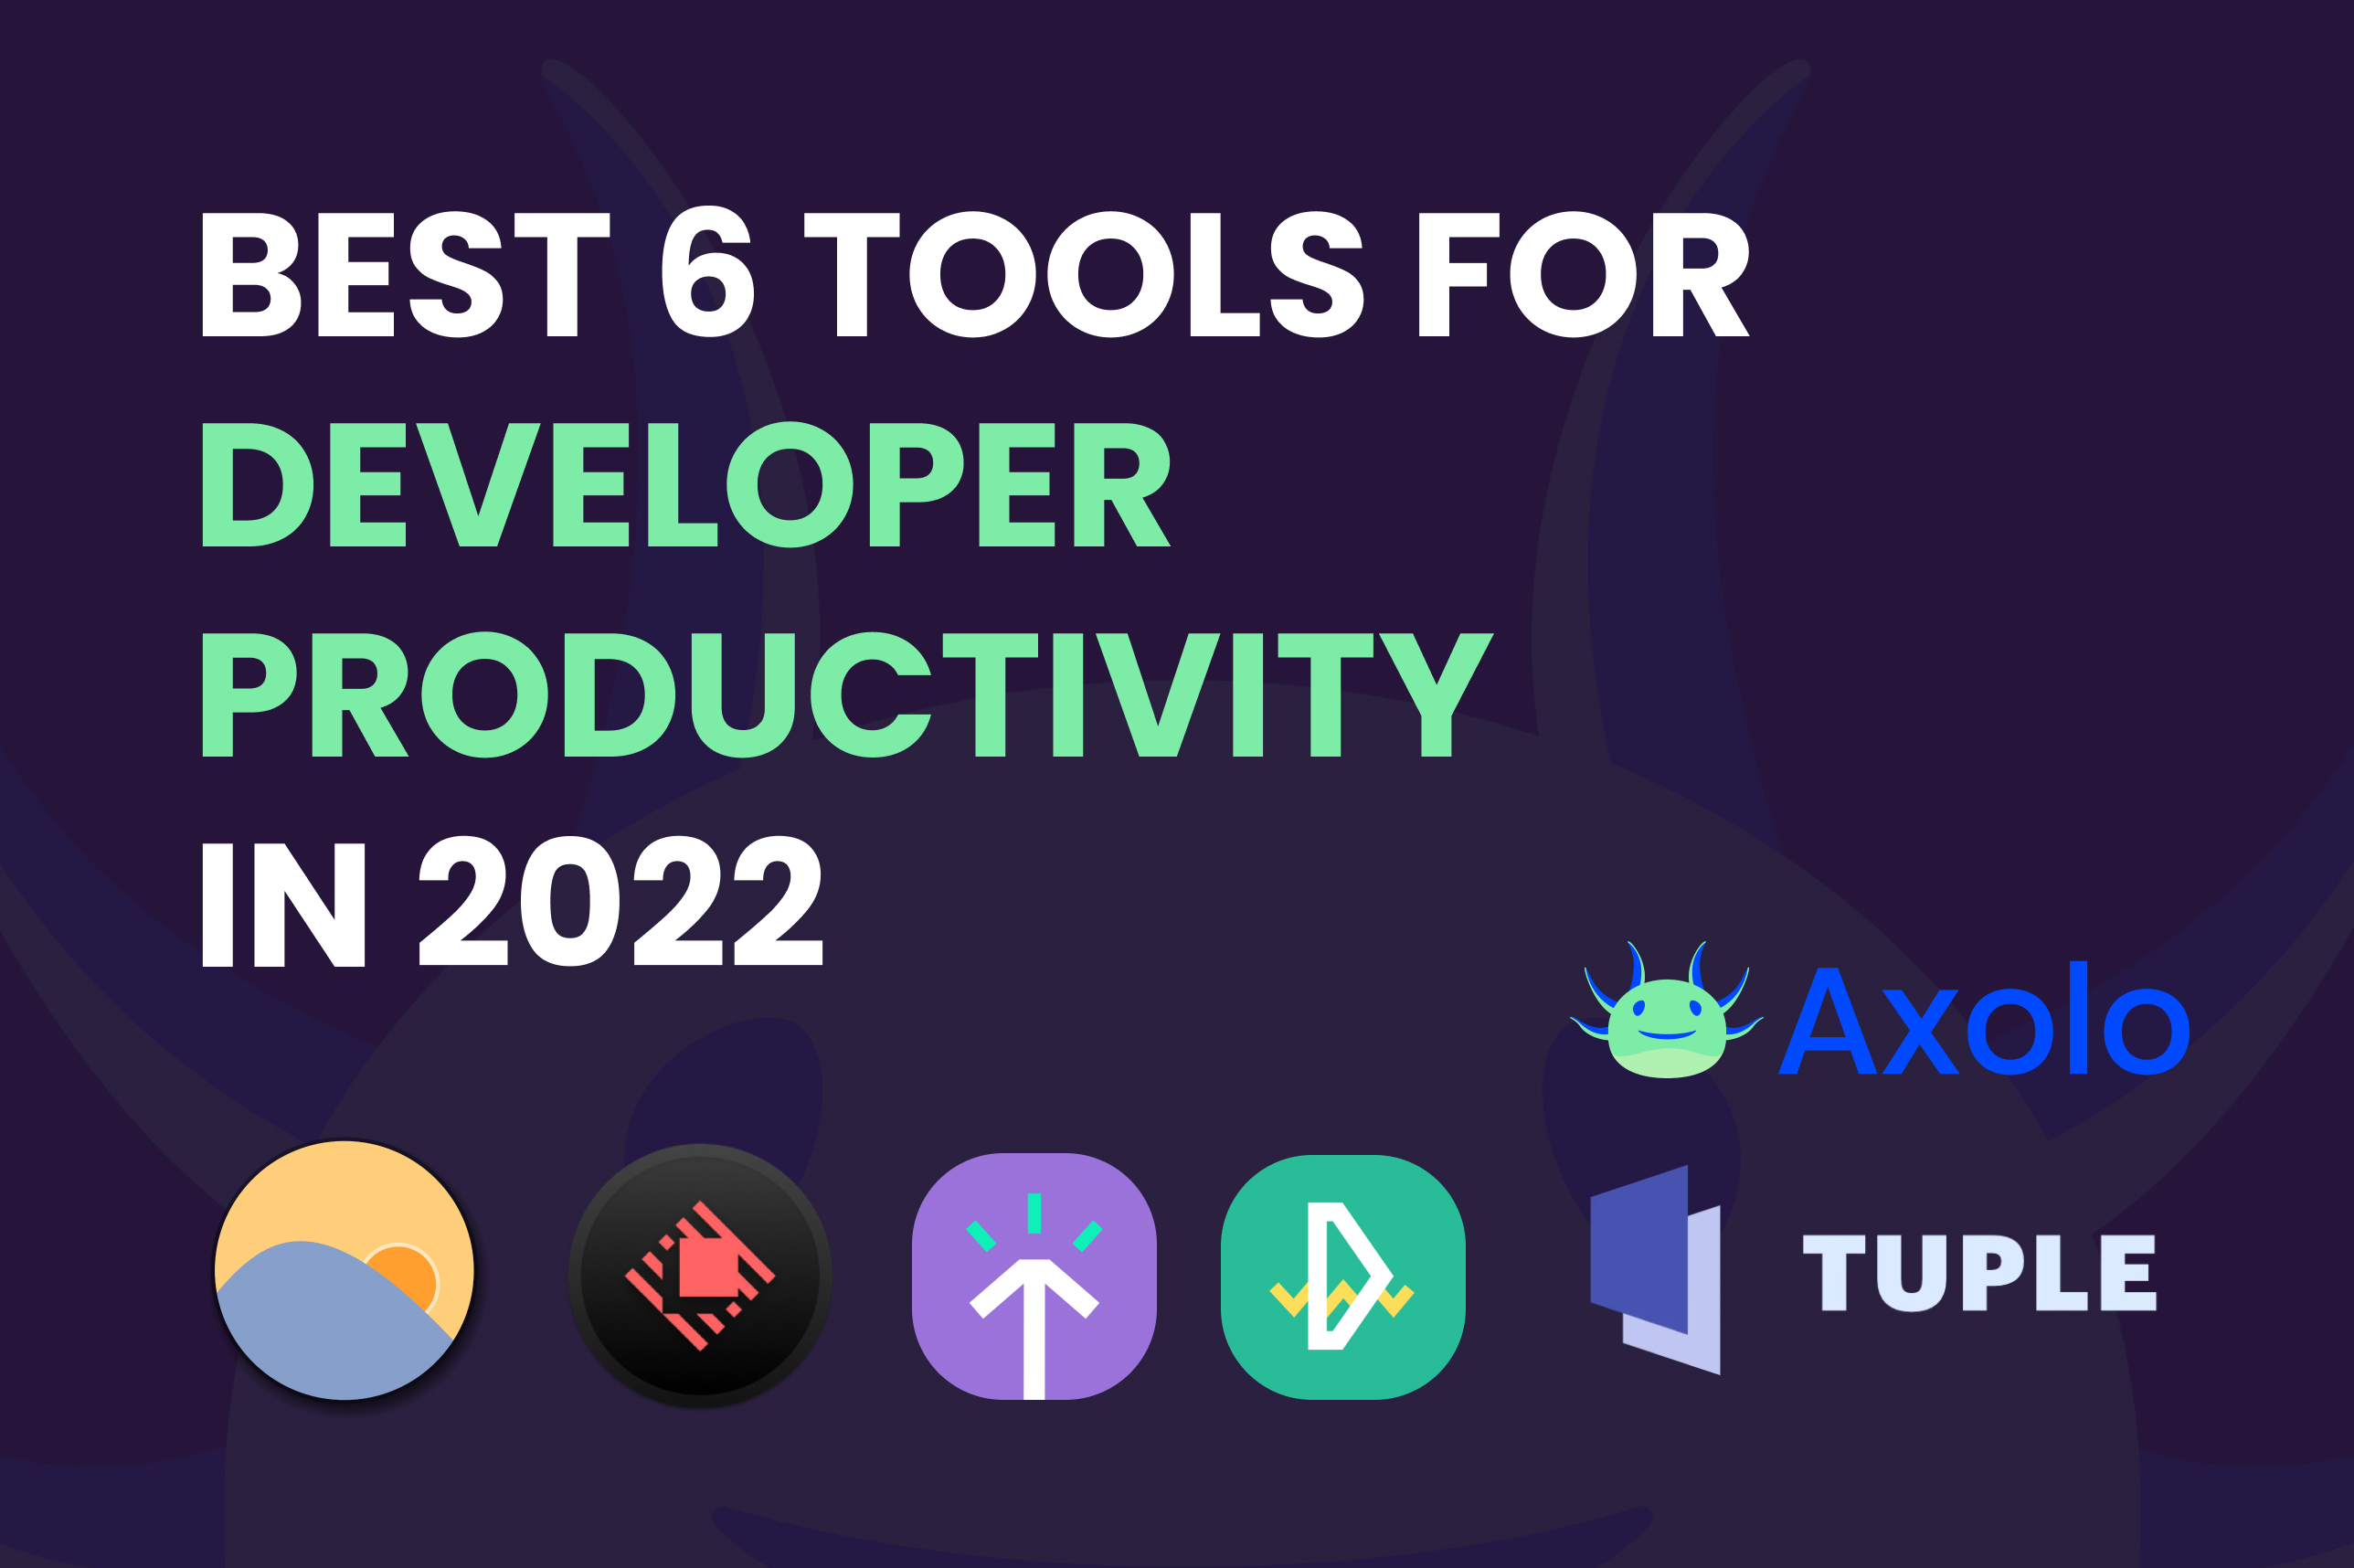 https://axolo.co/blog/static/images/productivity/best-6-tools-dev-productivity.jpg